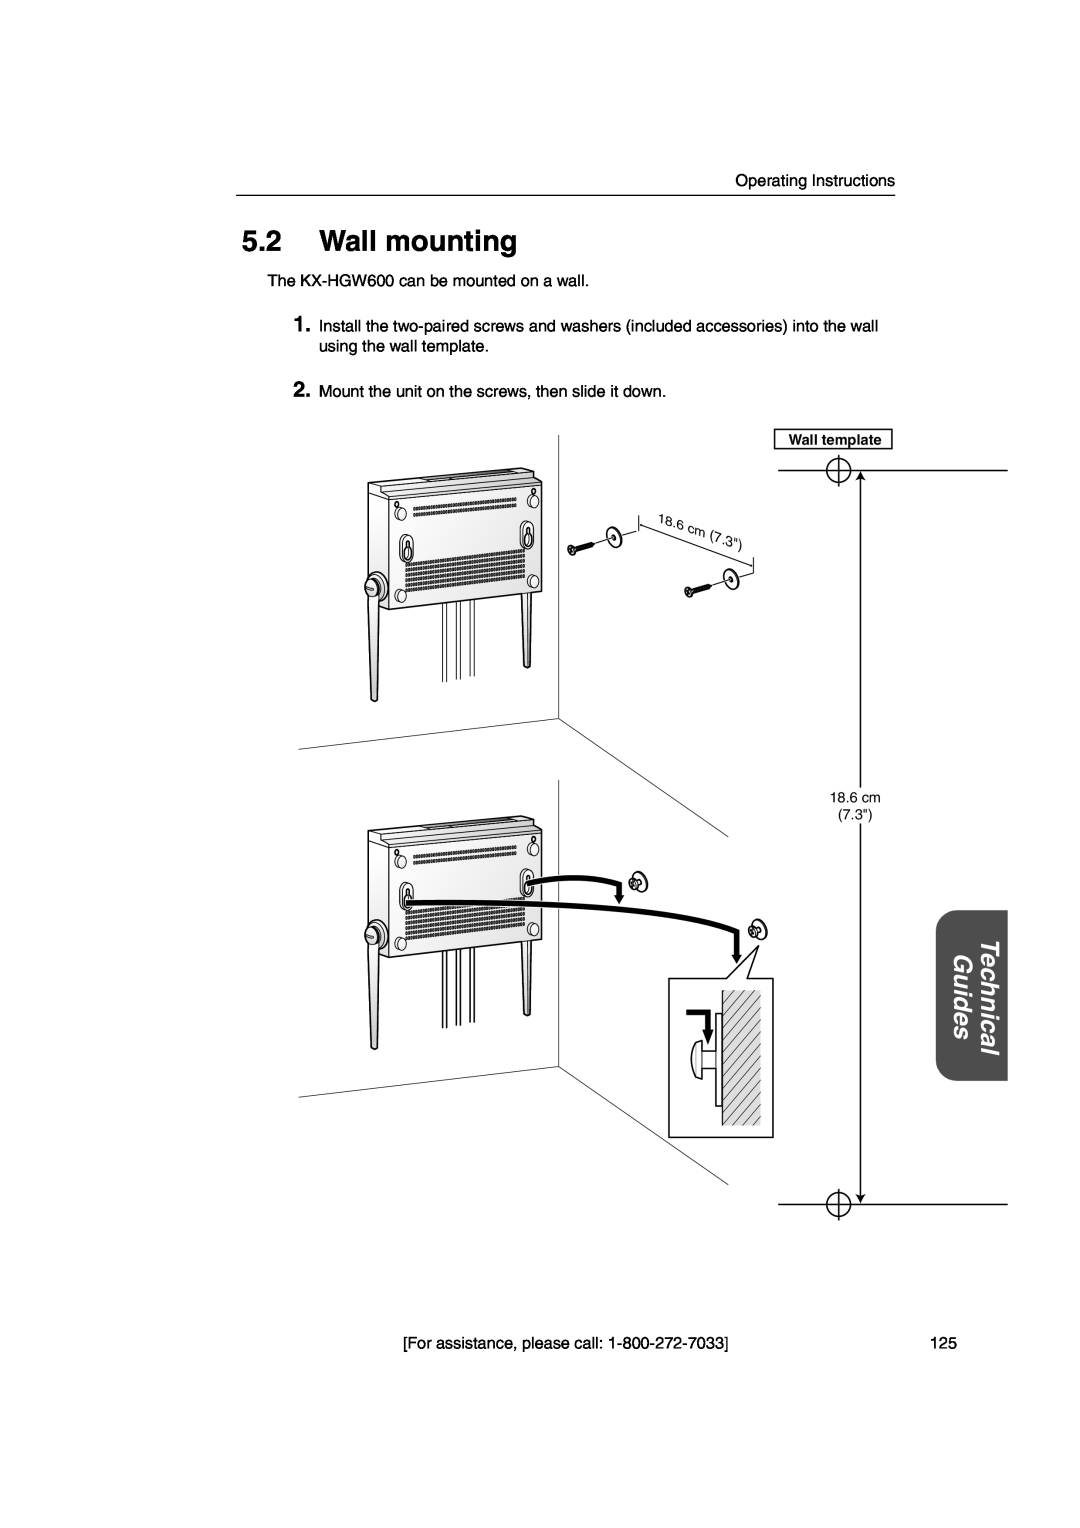 Panasonic KX-HGW600 manual Wall mounting, Guides, Technical, Wall template 